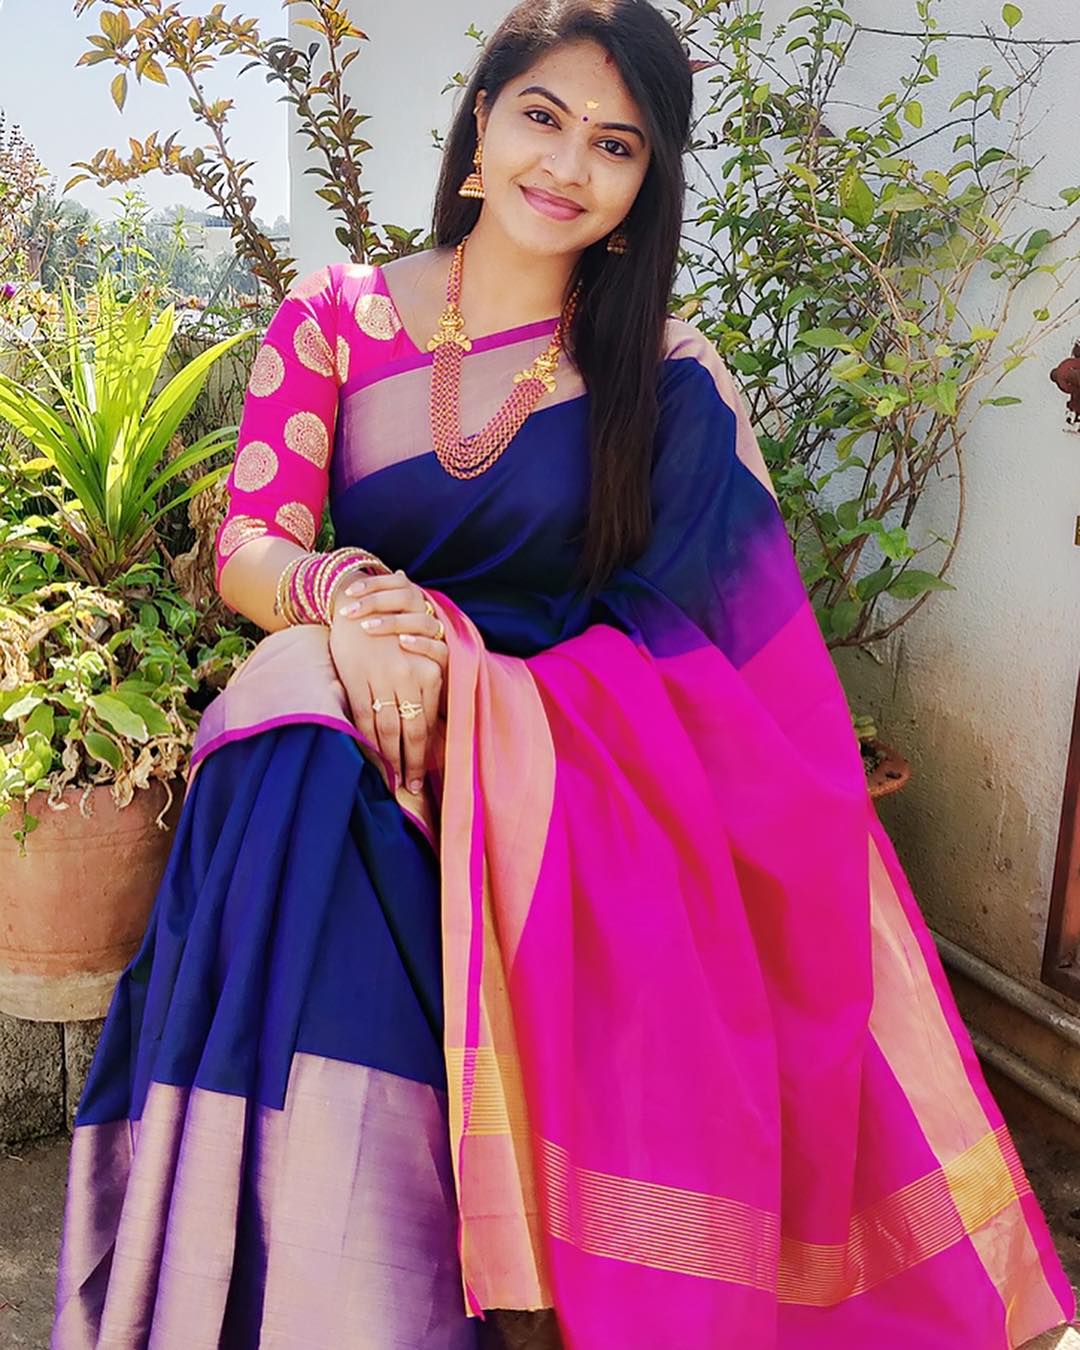 Saravanan Meenakshi Rachitha Beautiful Stills In Traditional Saree. Latest Indian Hollywood Movies Updates, Branding Online and Actress Gallery